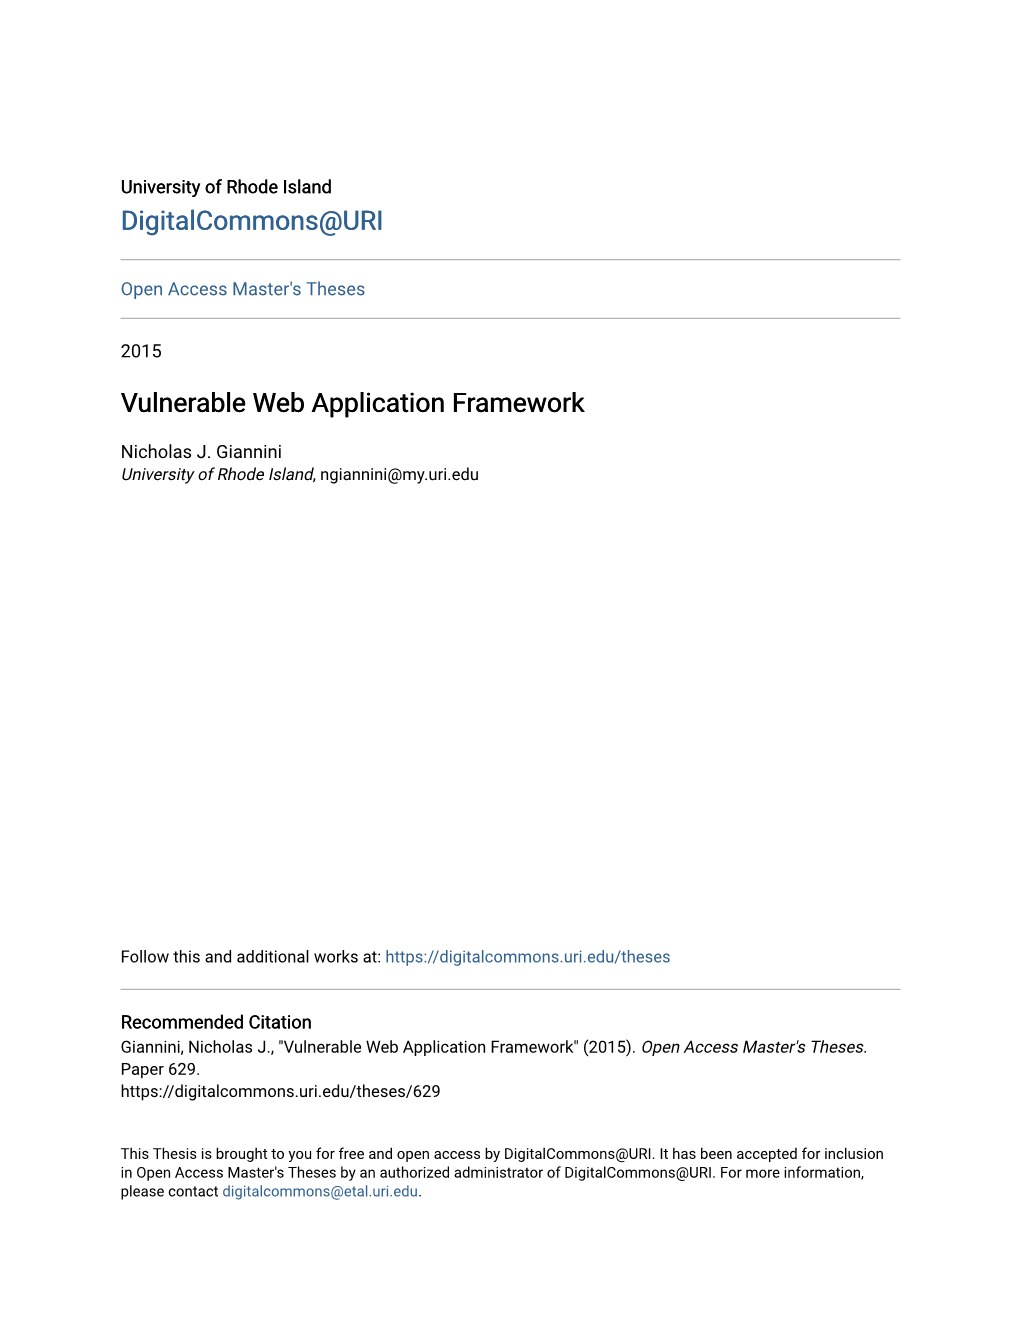 Vulnerable Web Application Framework